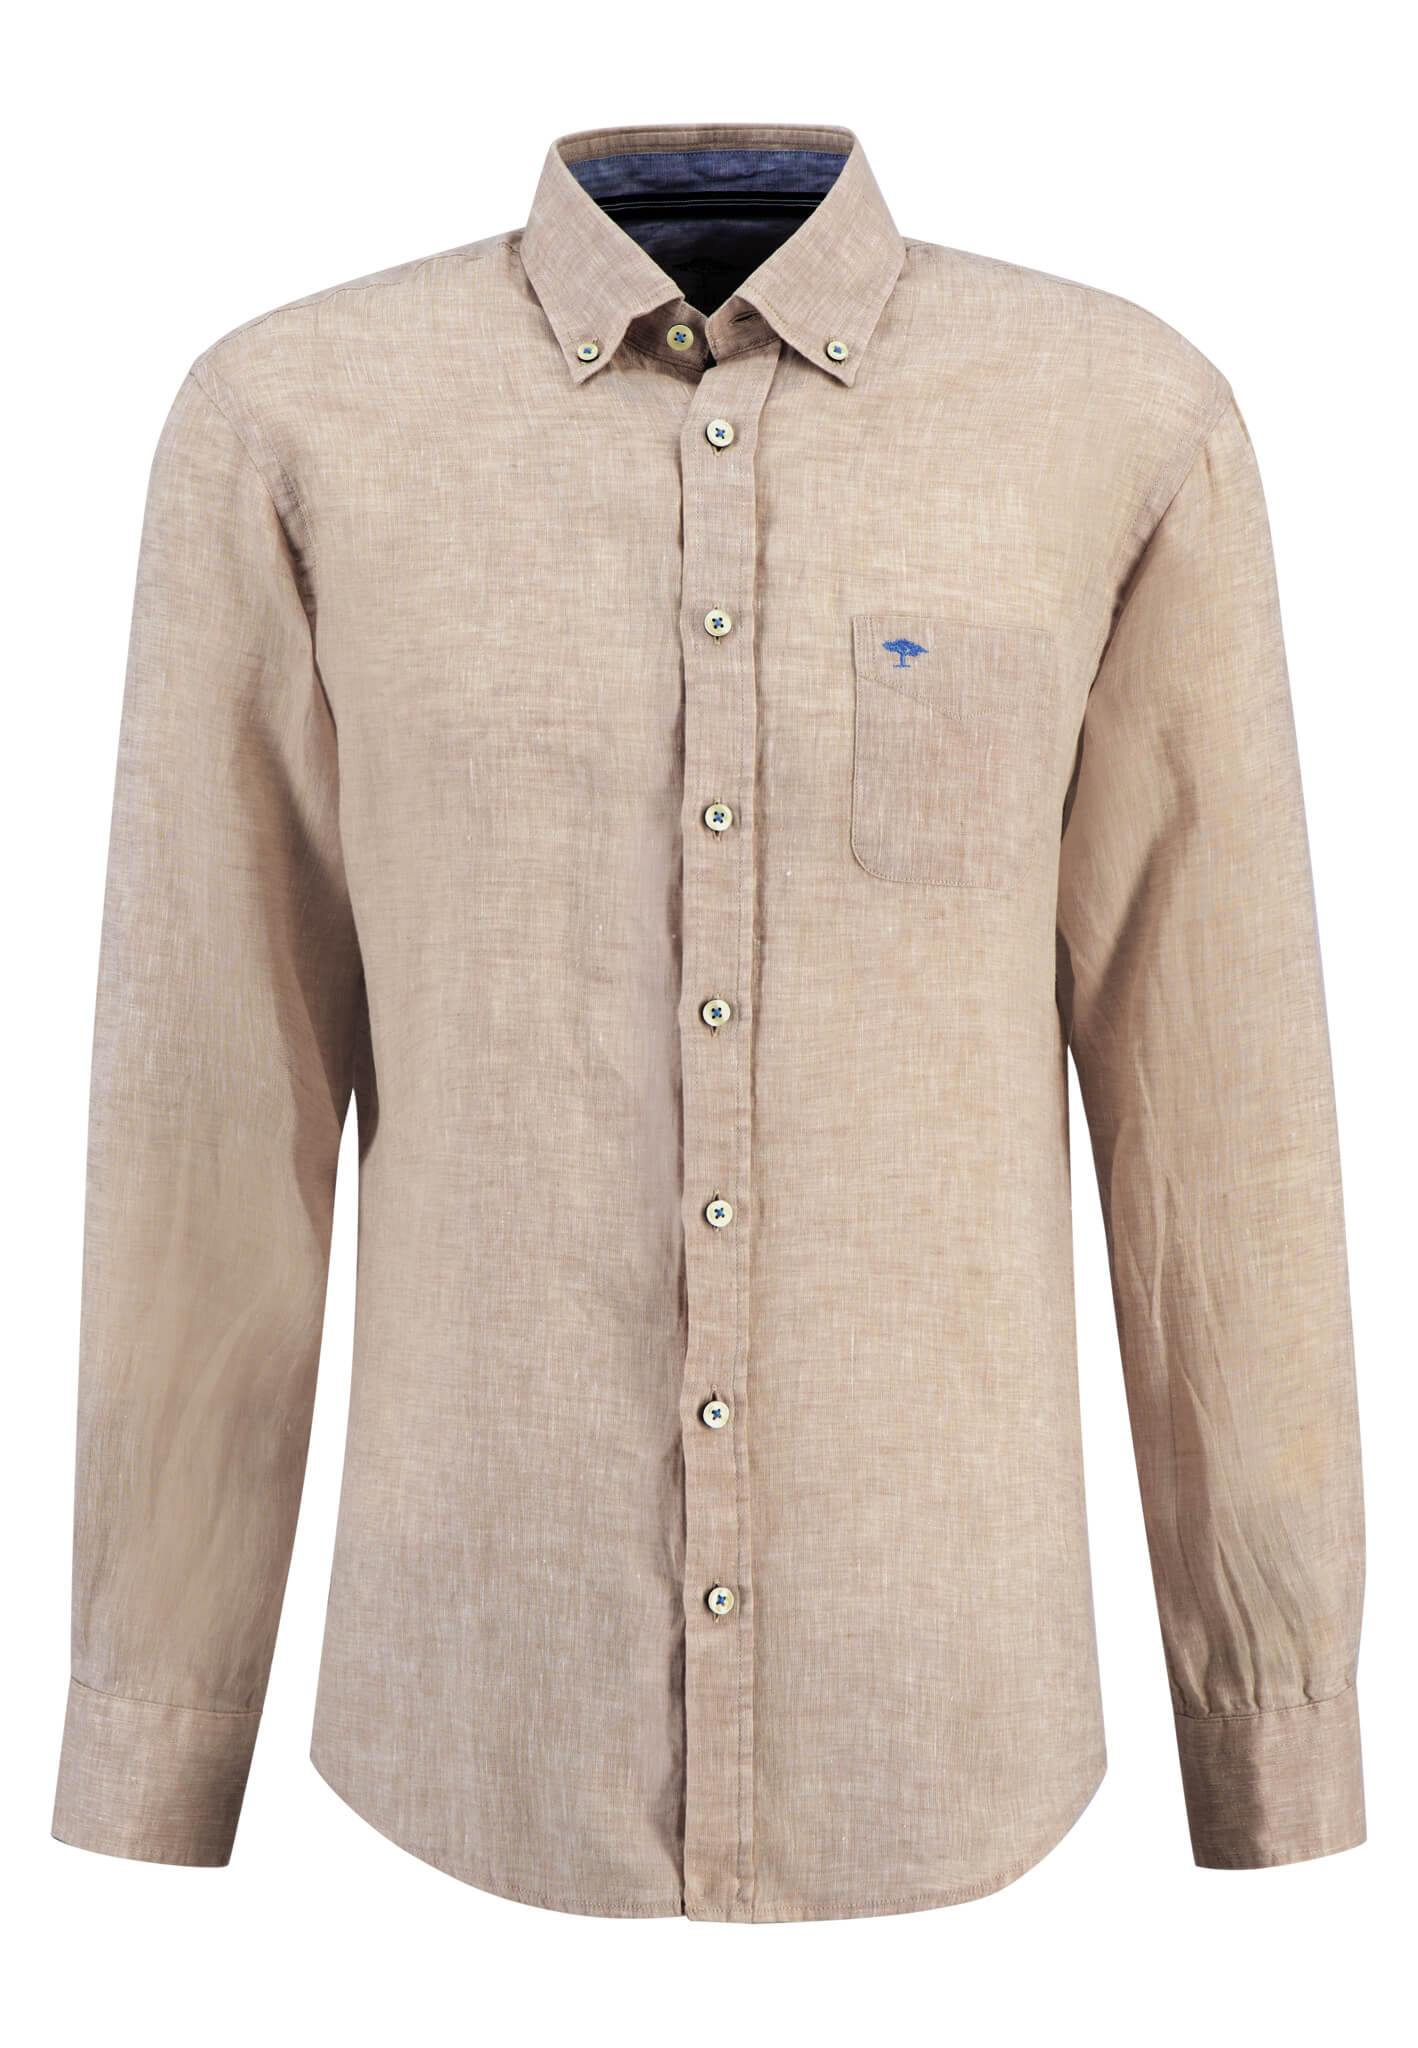 of Fynch Haslemere - Shirts Hatton Linen Pure Davids